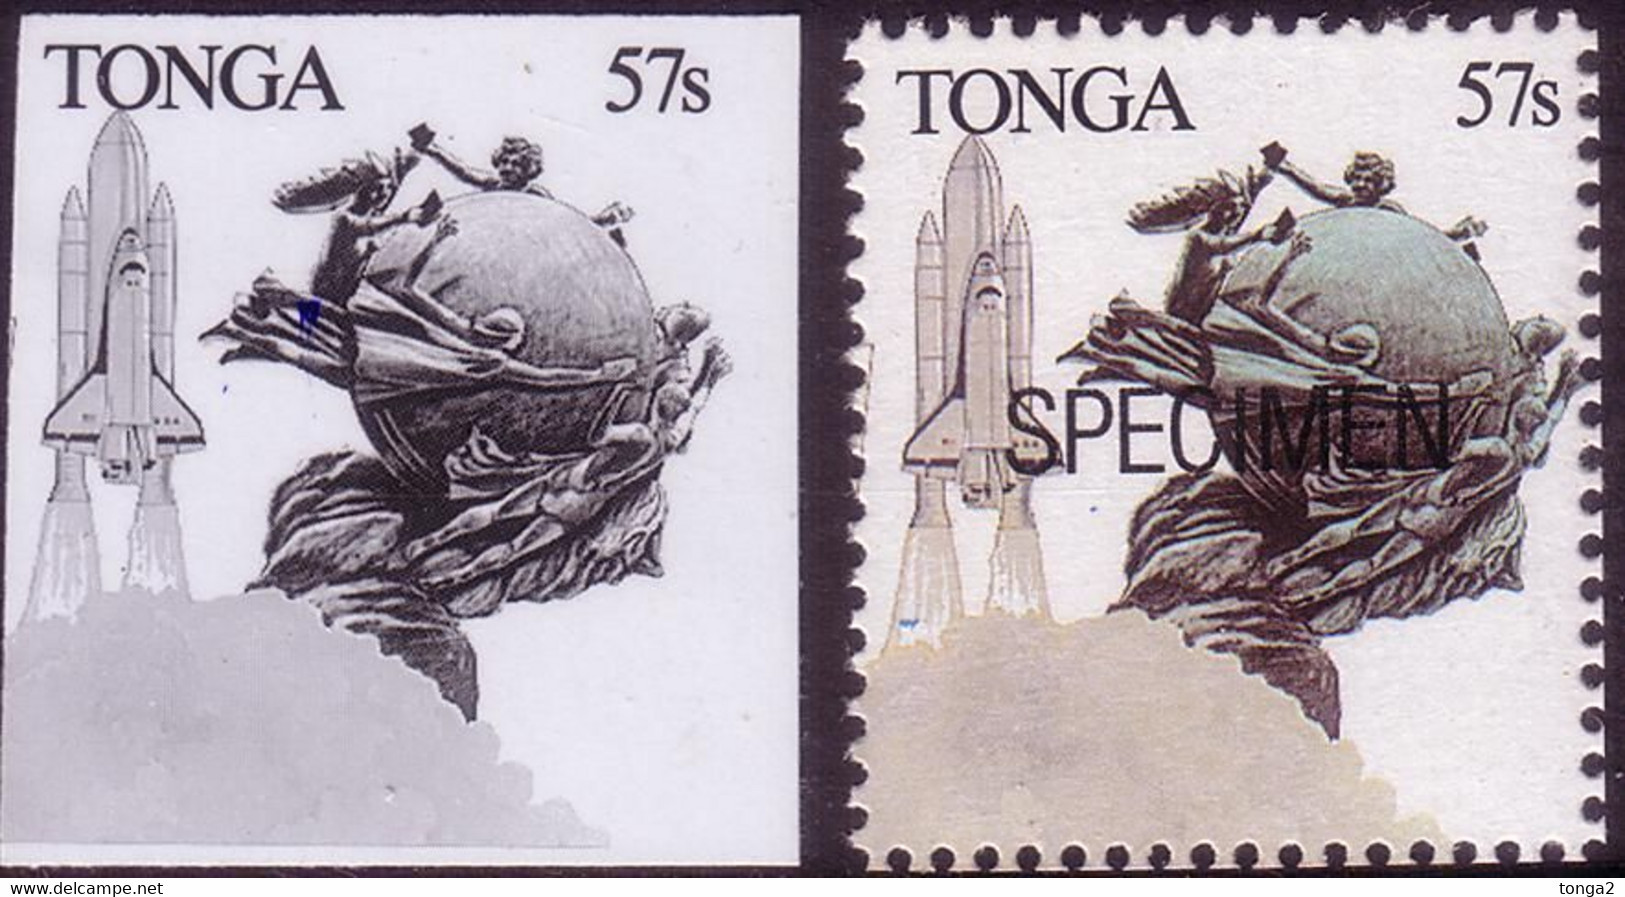 Tonga 1989 - Space Shuttle - Proof In Black & White On Thin Card + Specimen - Oceania